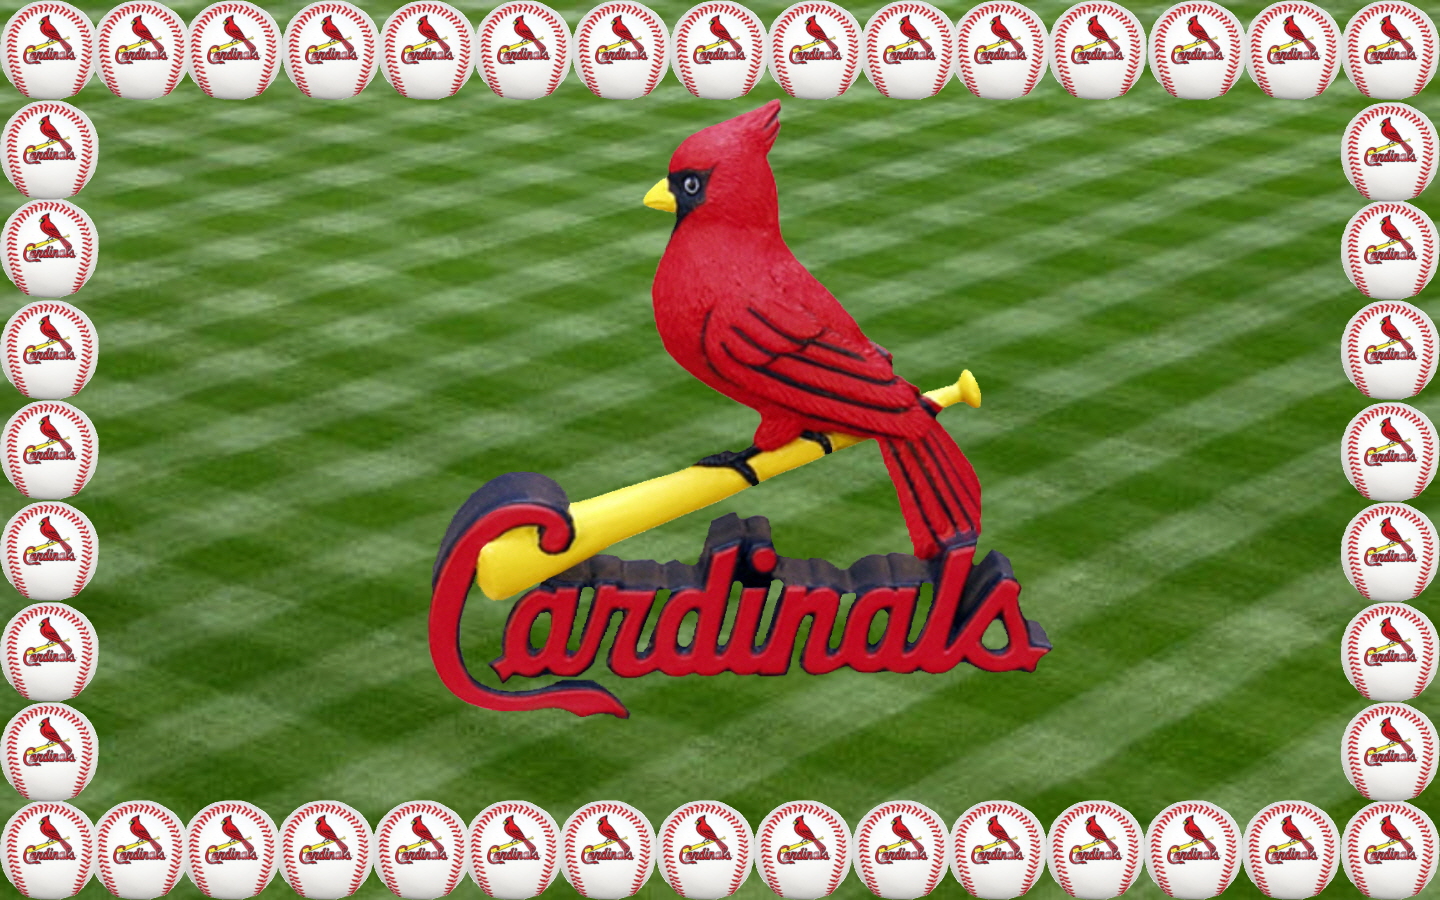 St Louis Cardinals HD Image Wallpaper